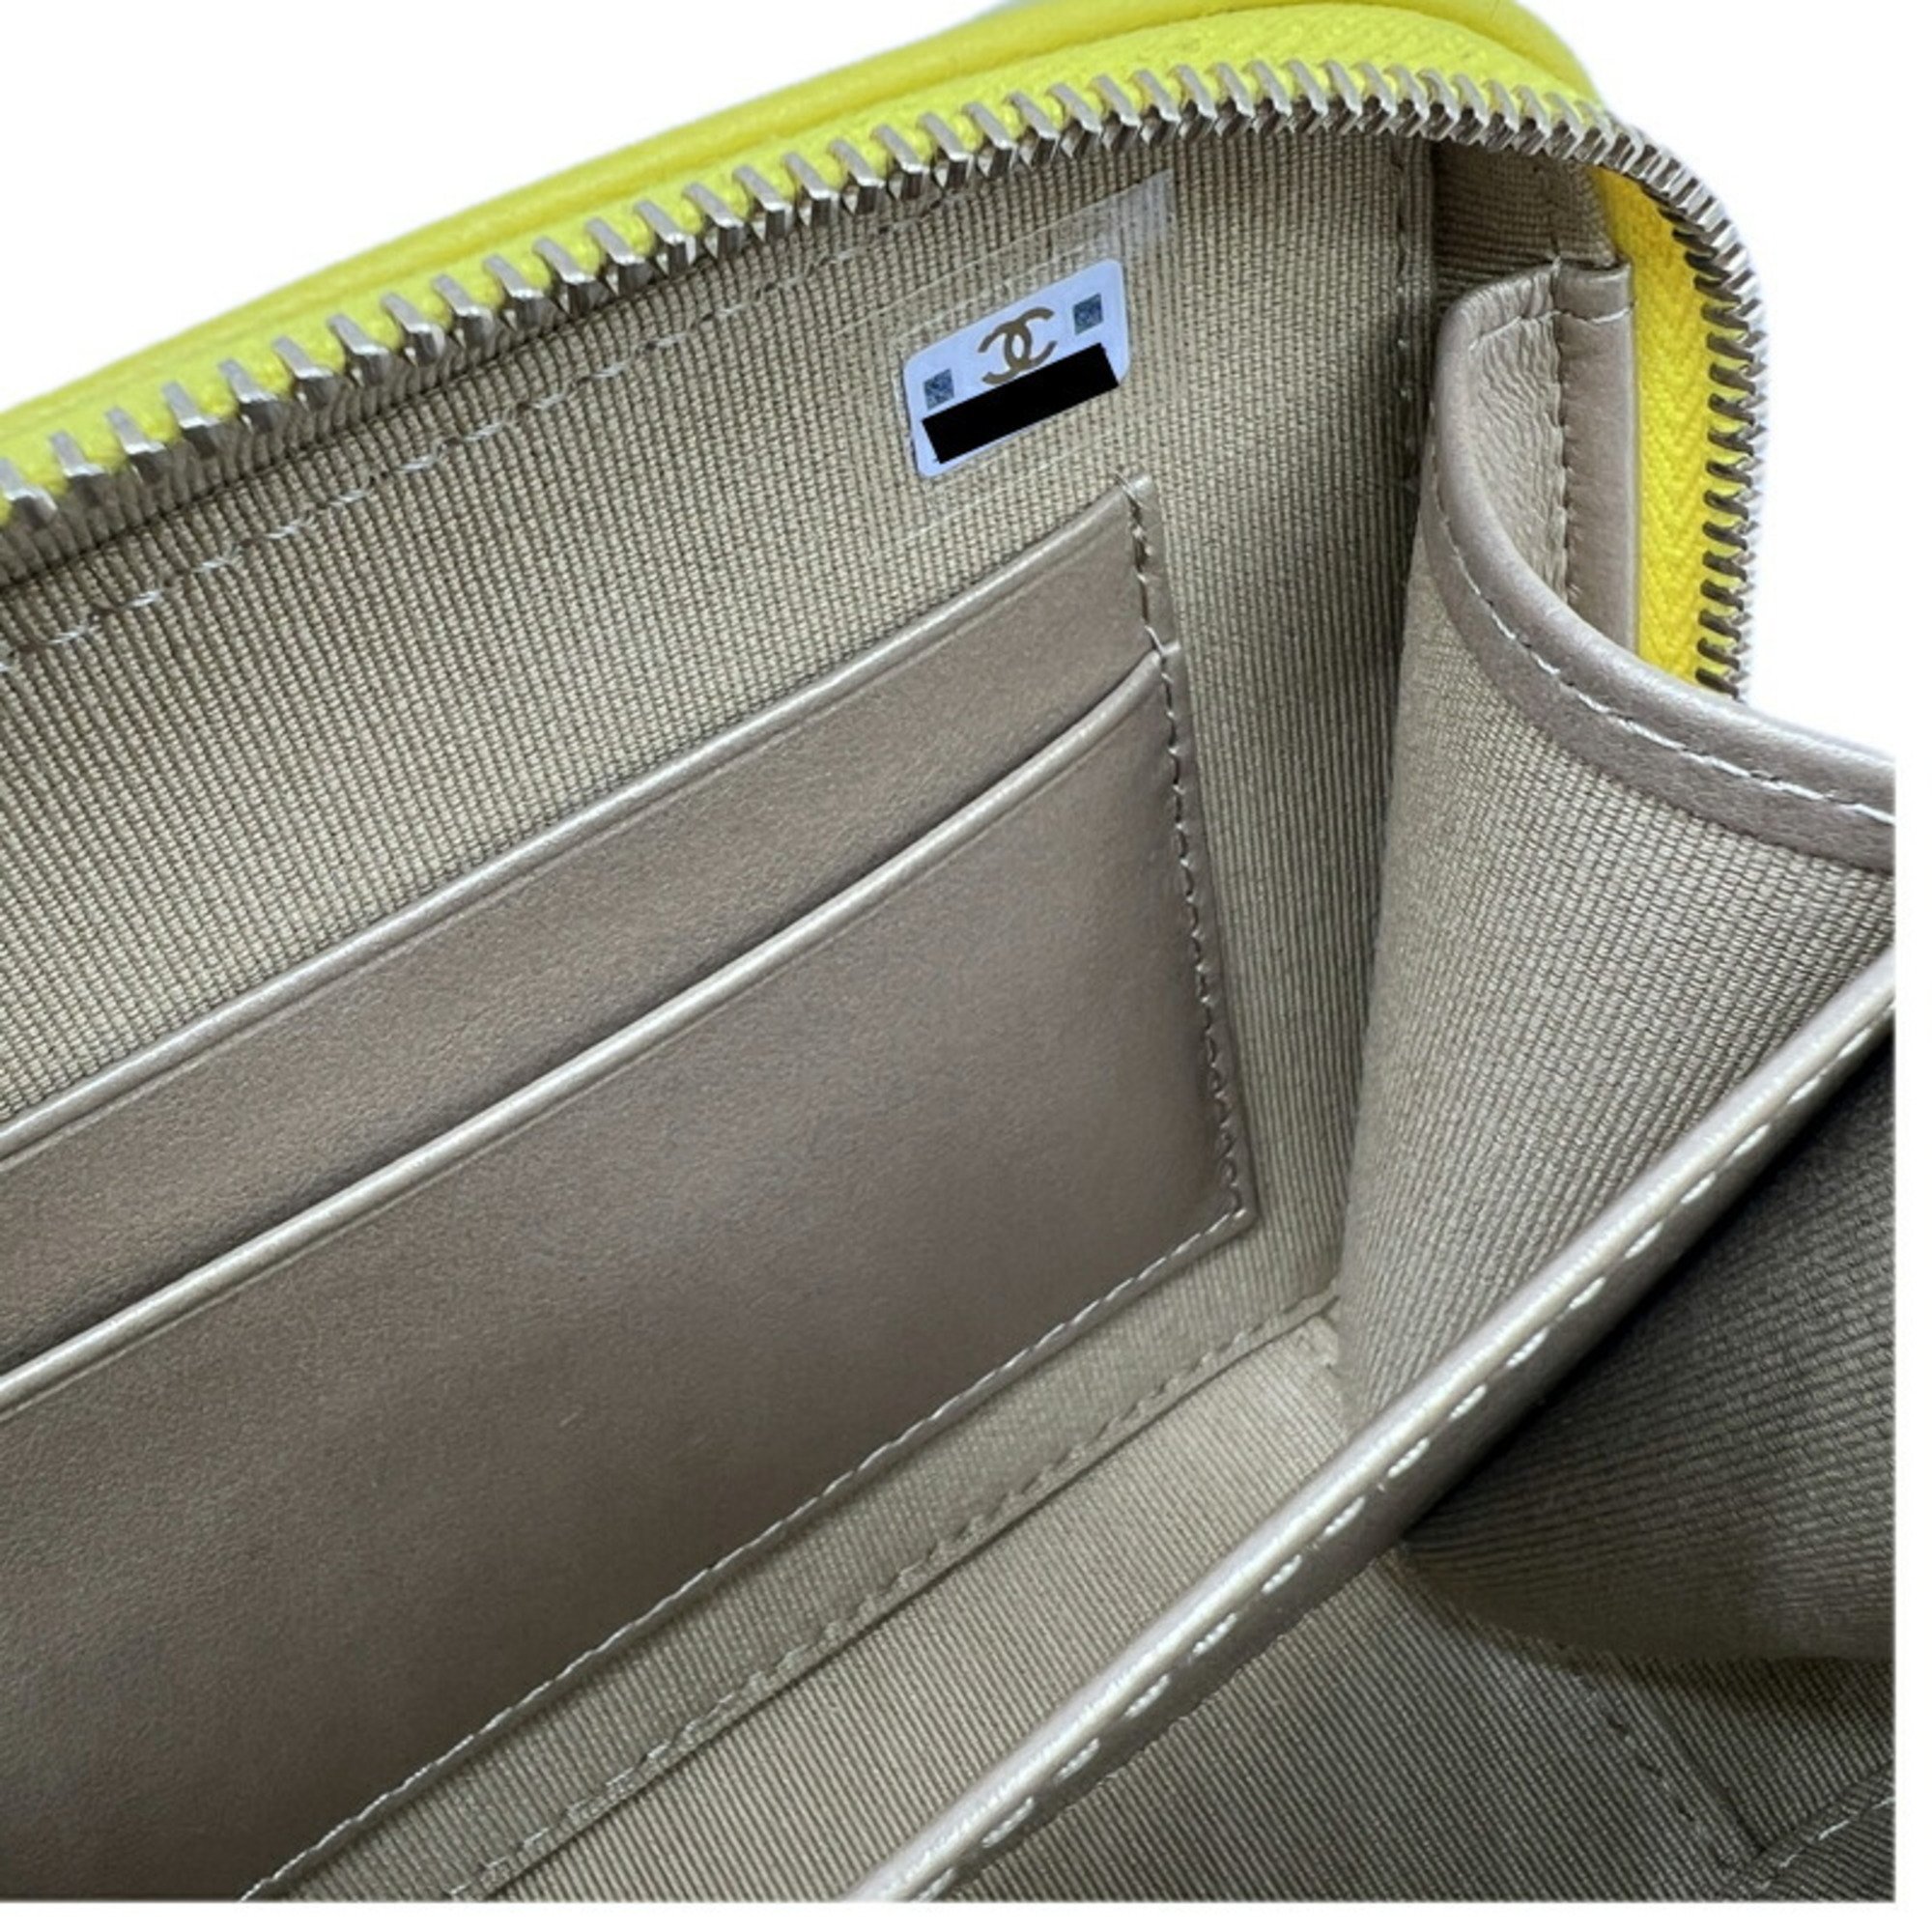 CHANEL Timeless Classic Bag Ball Chain AP2463 Yellow Handbag Wallet